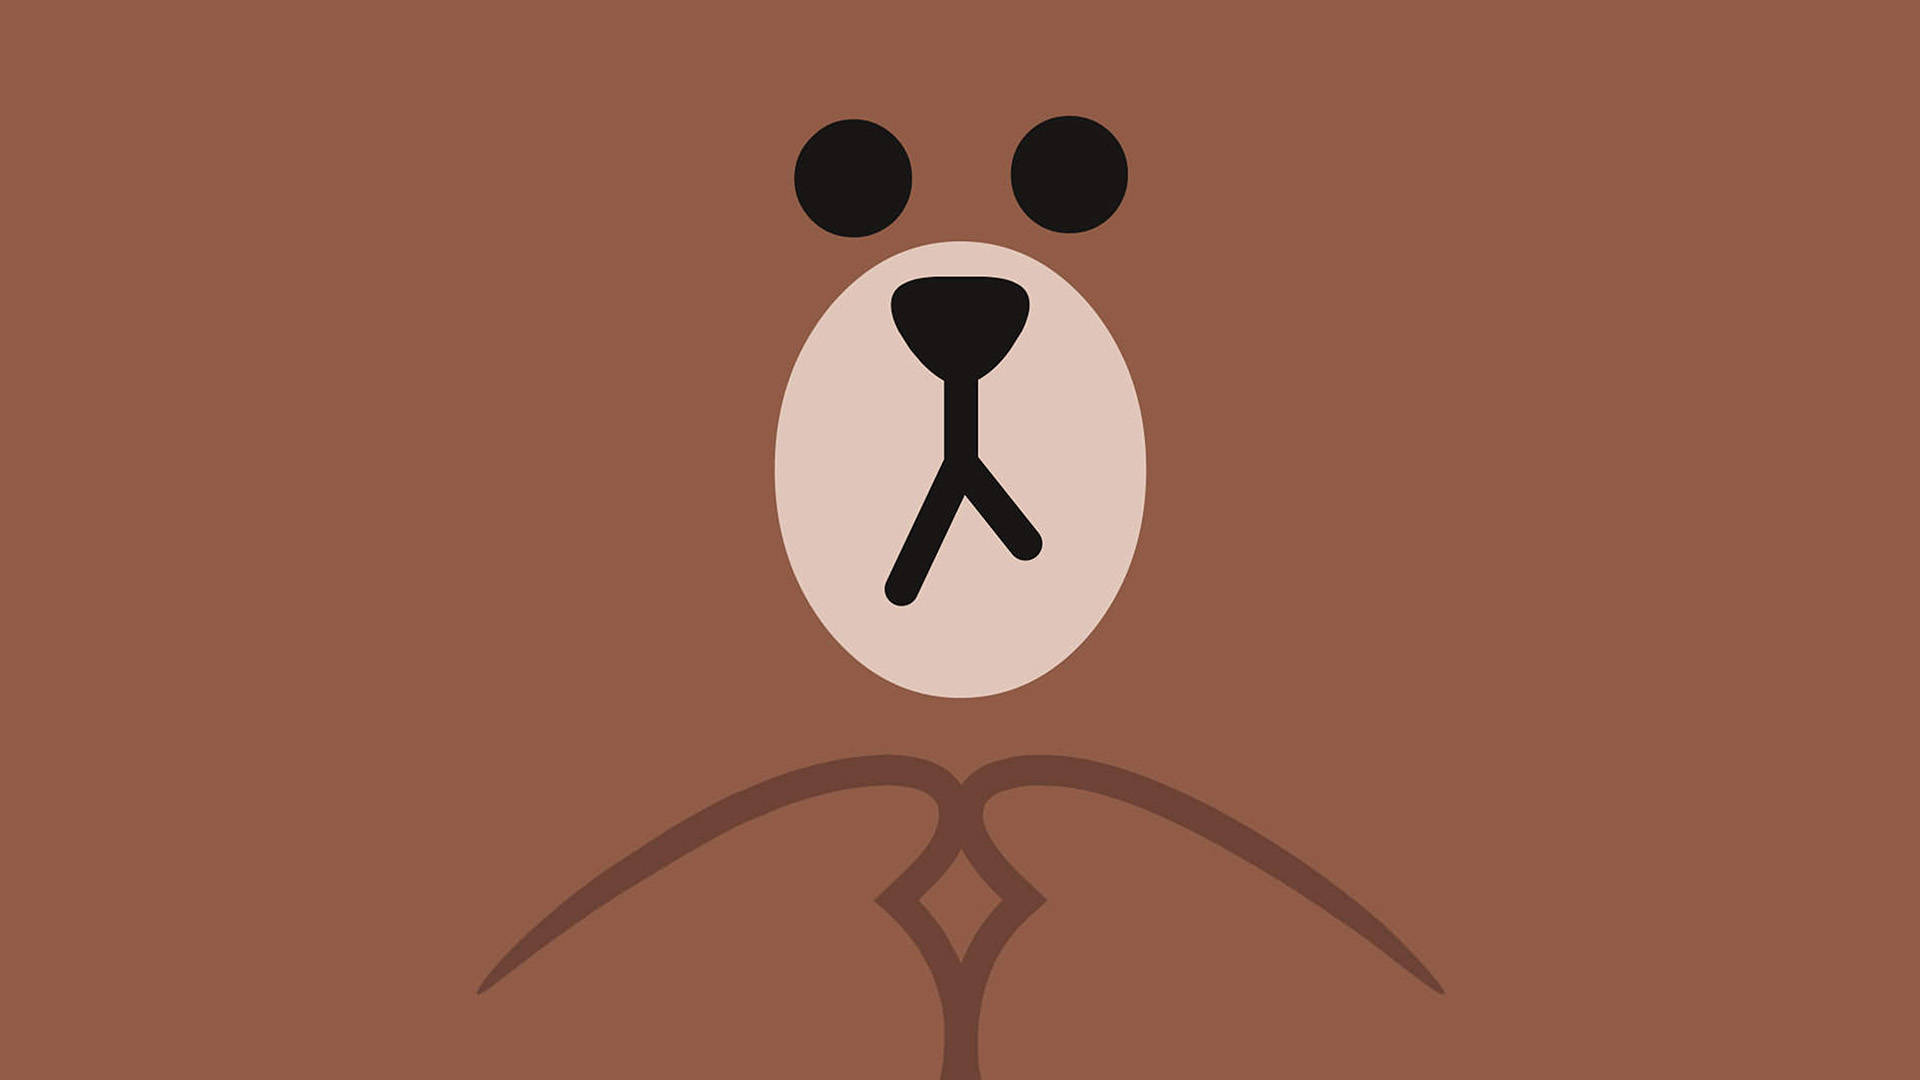 Free Cute Brown Bear Wallpaper Downloads, [100+] Cute Brown Bear Wallpapers  for FREE 